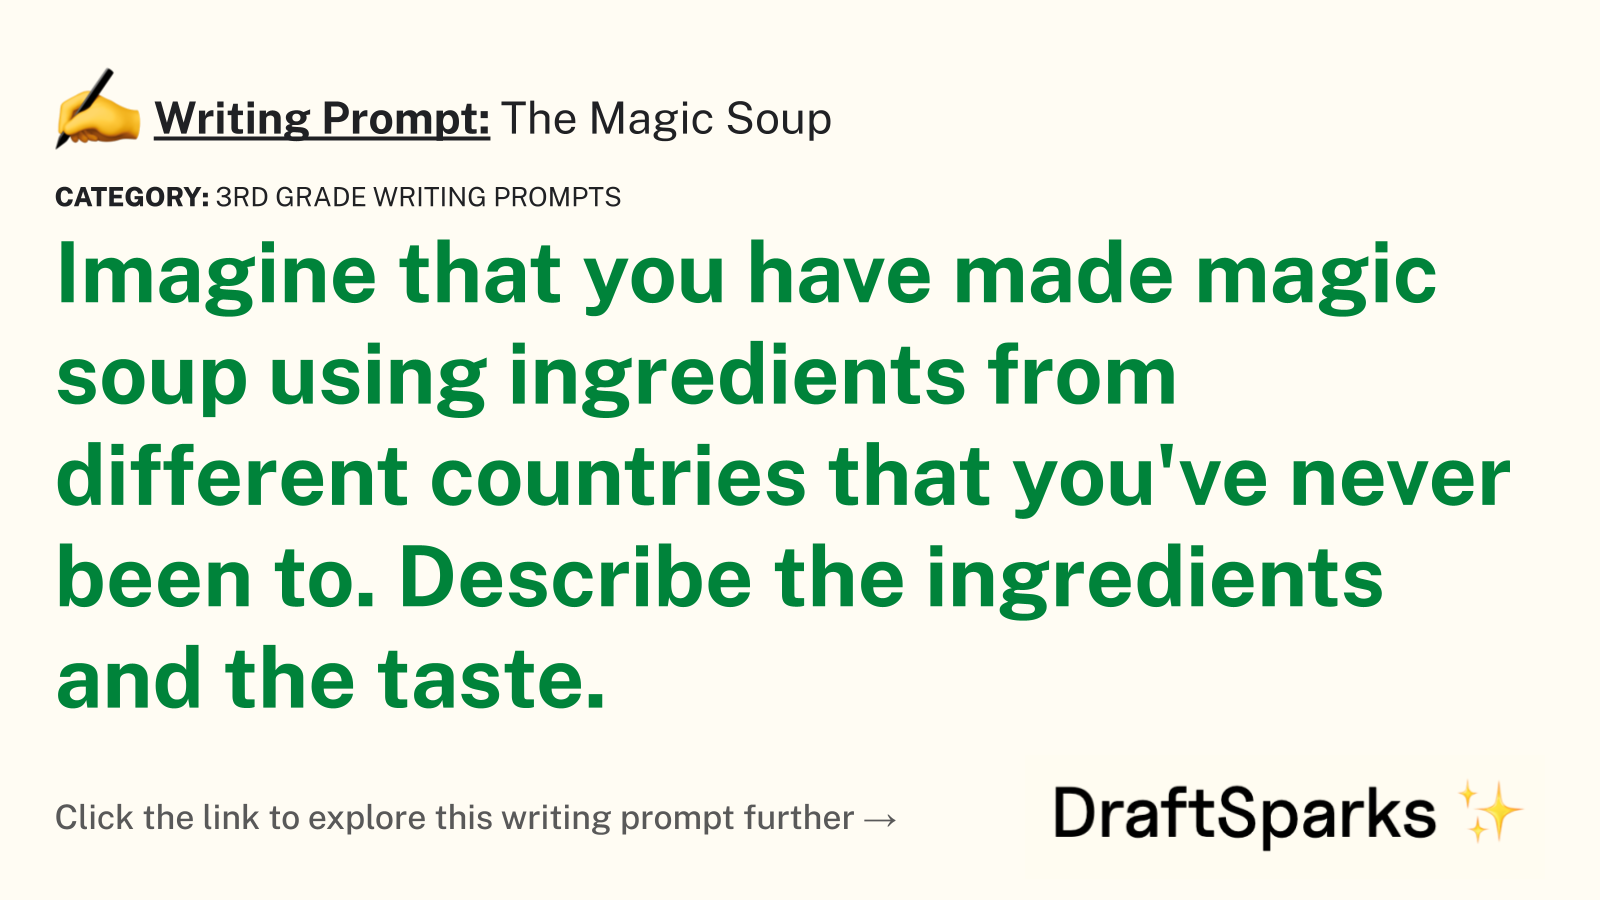 The Magic Soup